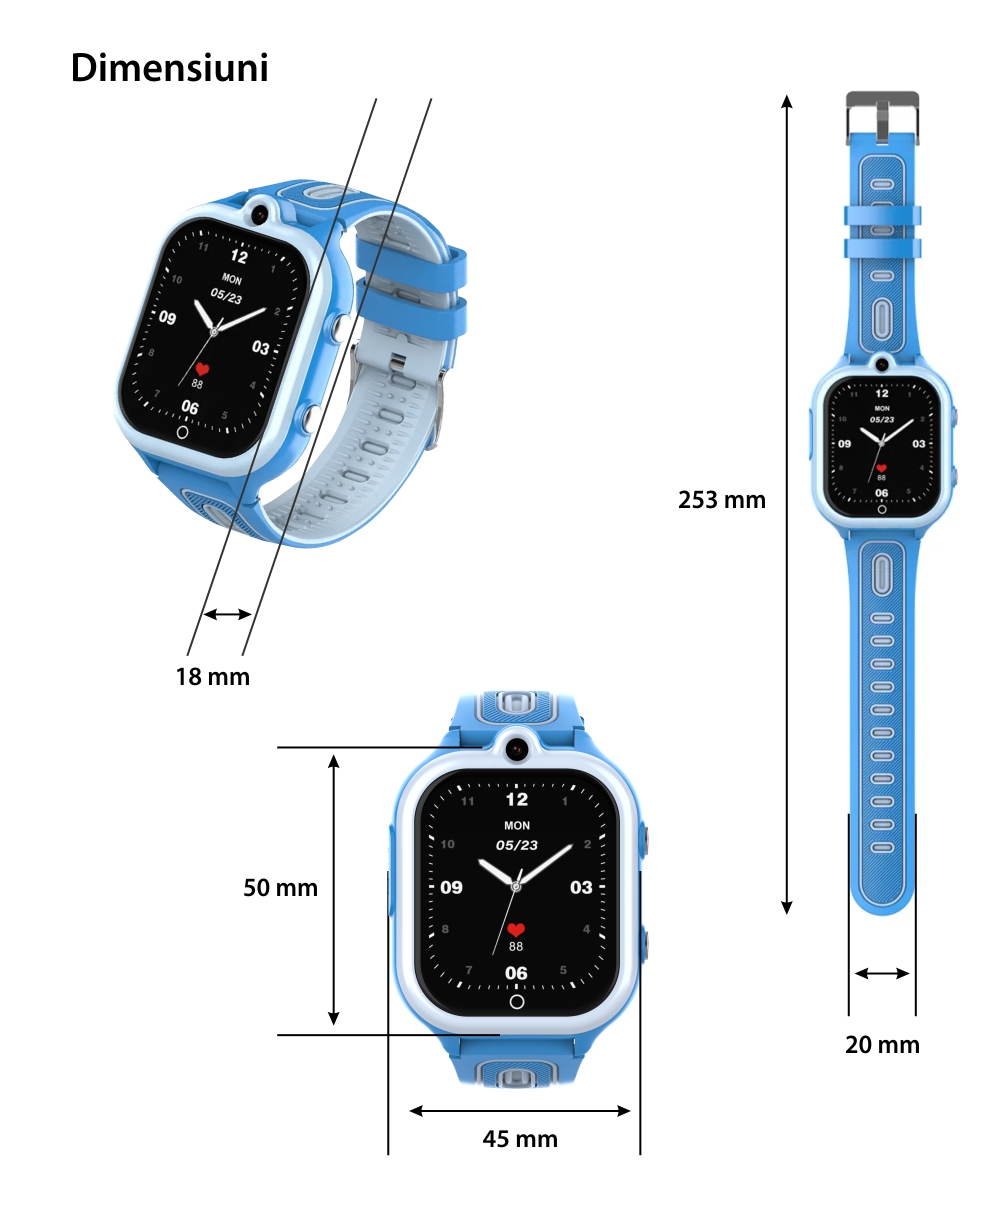 Ceas Smartwatch Pentru Copii Wonlex Wonlex KT29 cu Functie Telefon, Contacte, Wi-Fi, Bluetooth, Istoric apeluri, Camera, 4G, Roz